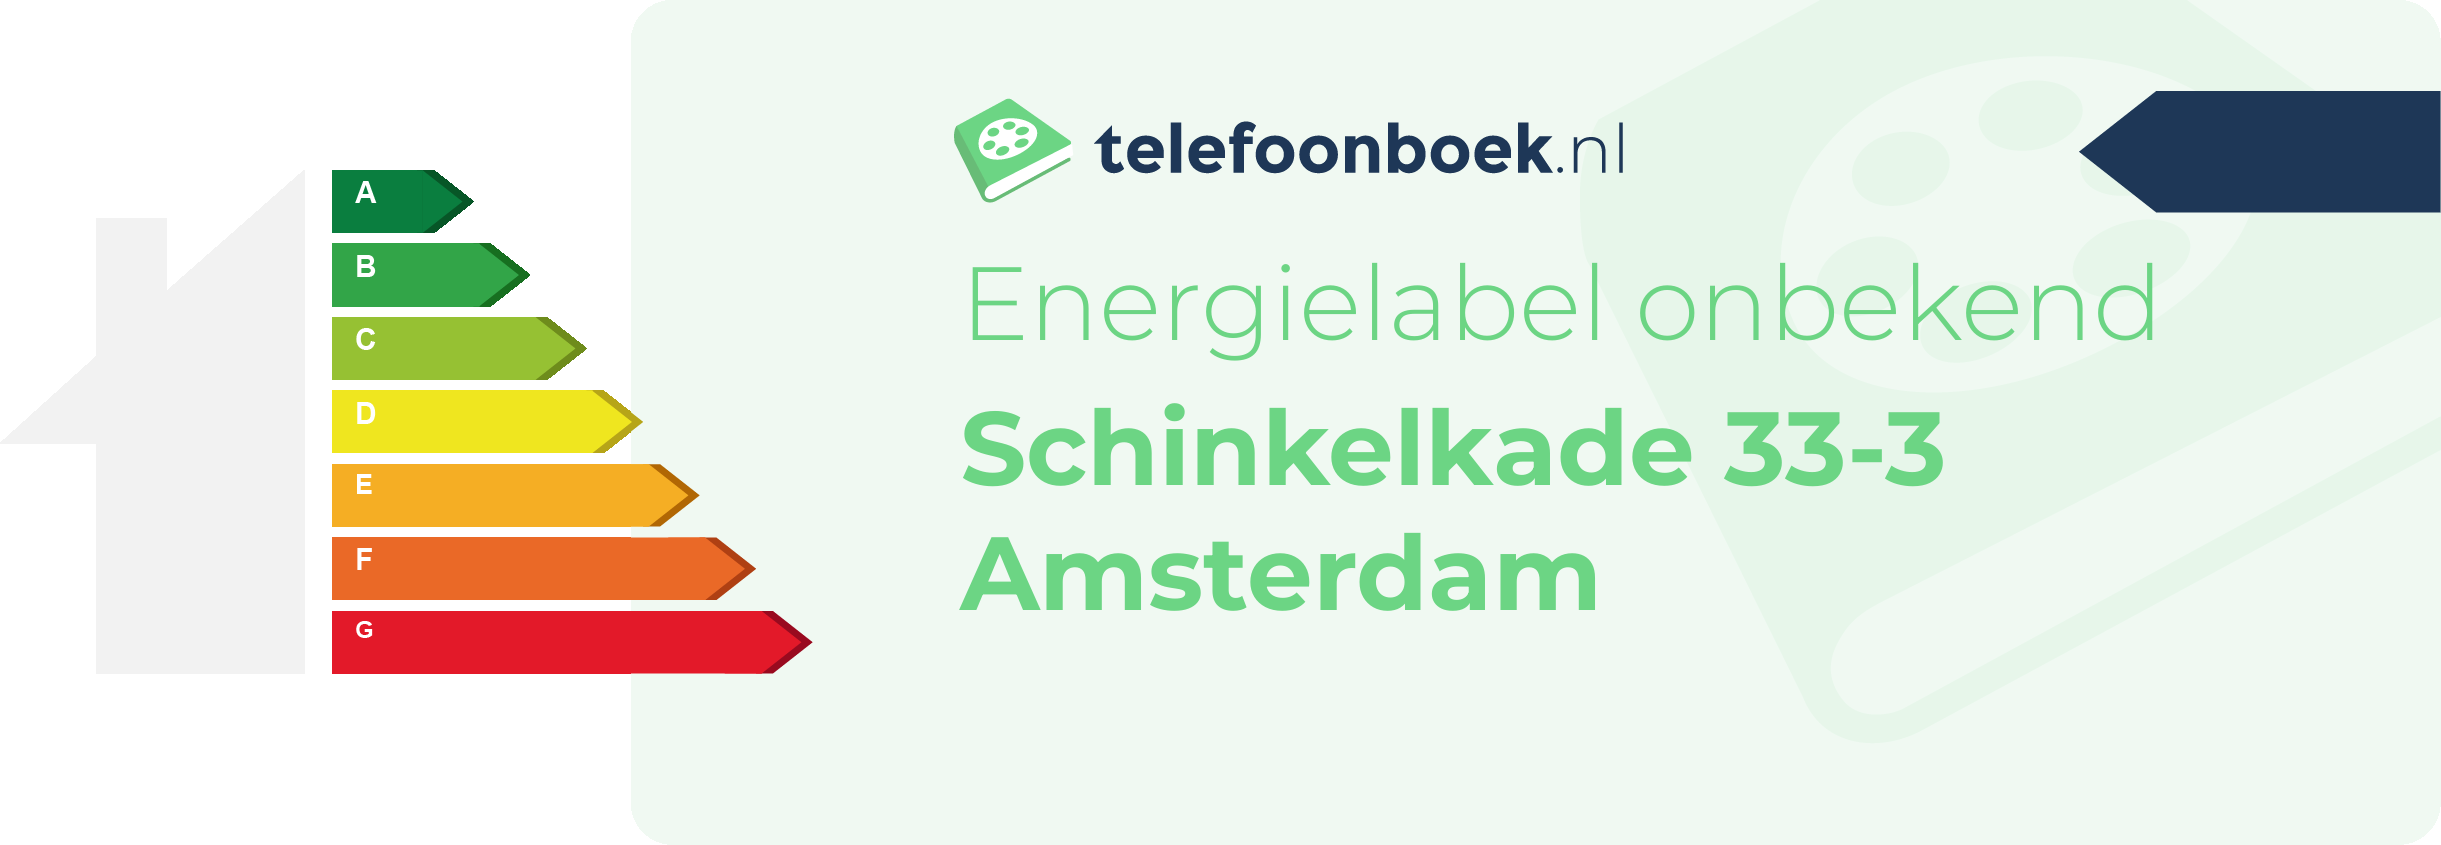 Energielabel Schinkelkade 33-3 Amsterdam